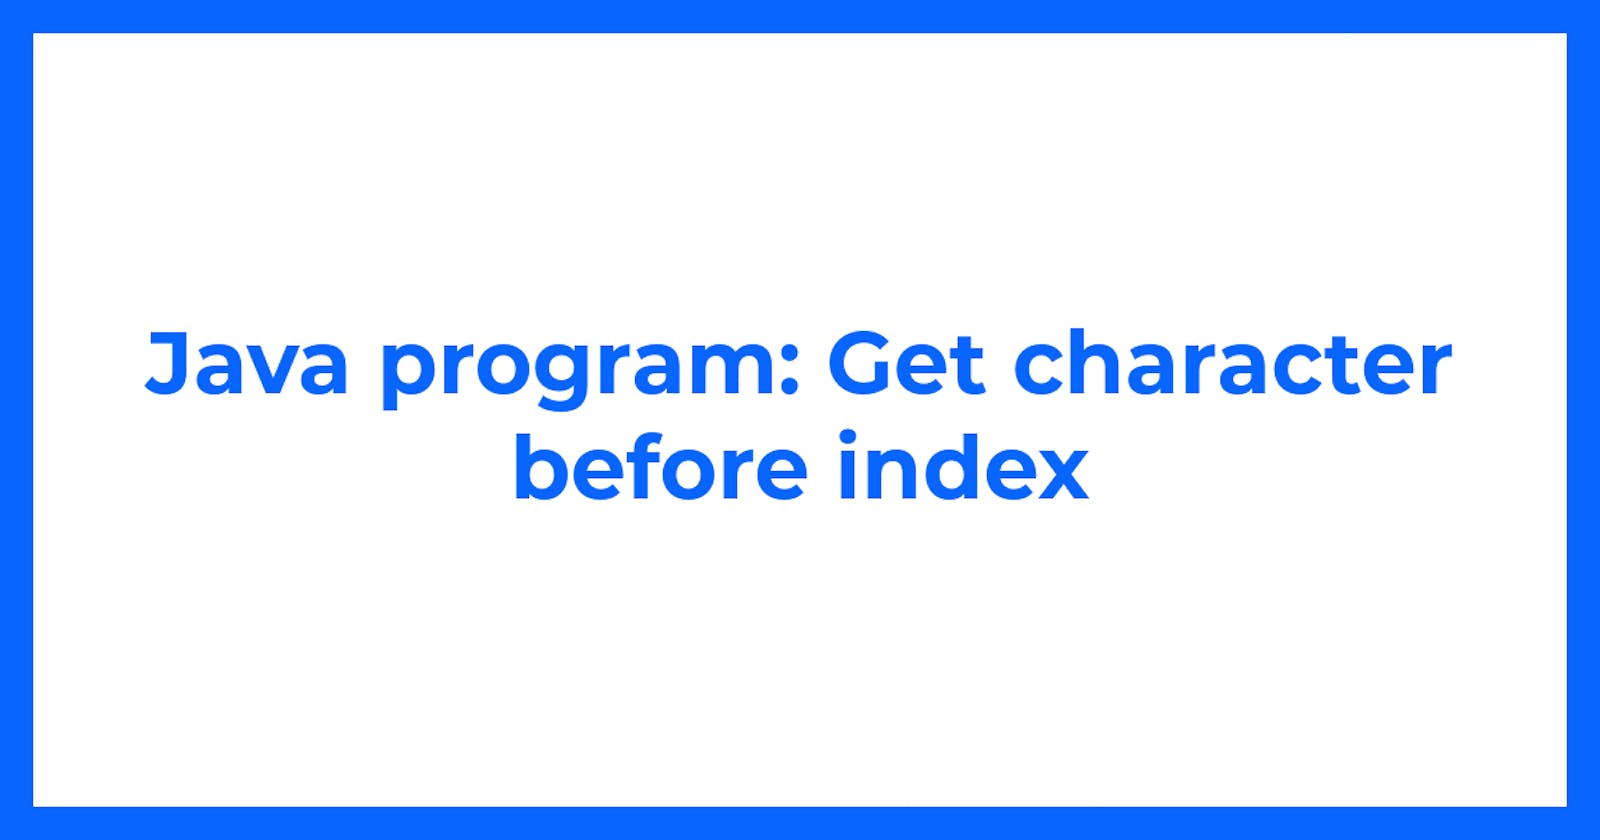 Java program: Get character before index